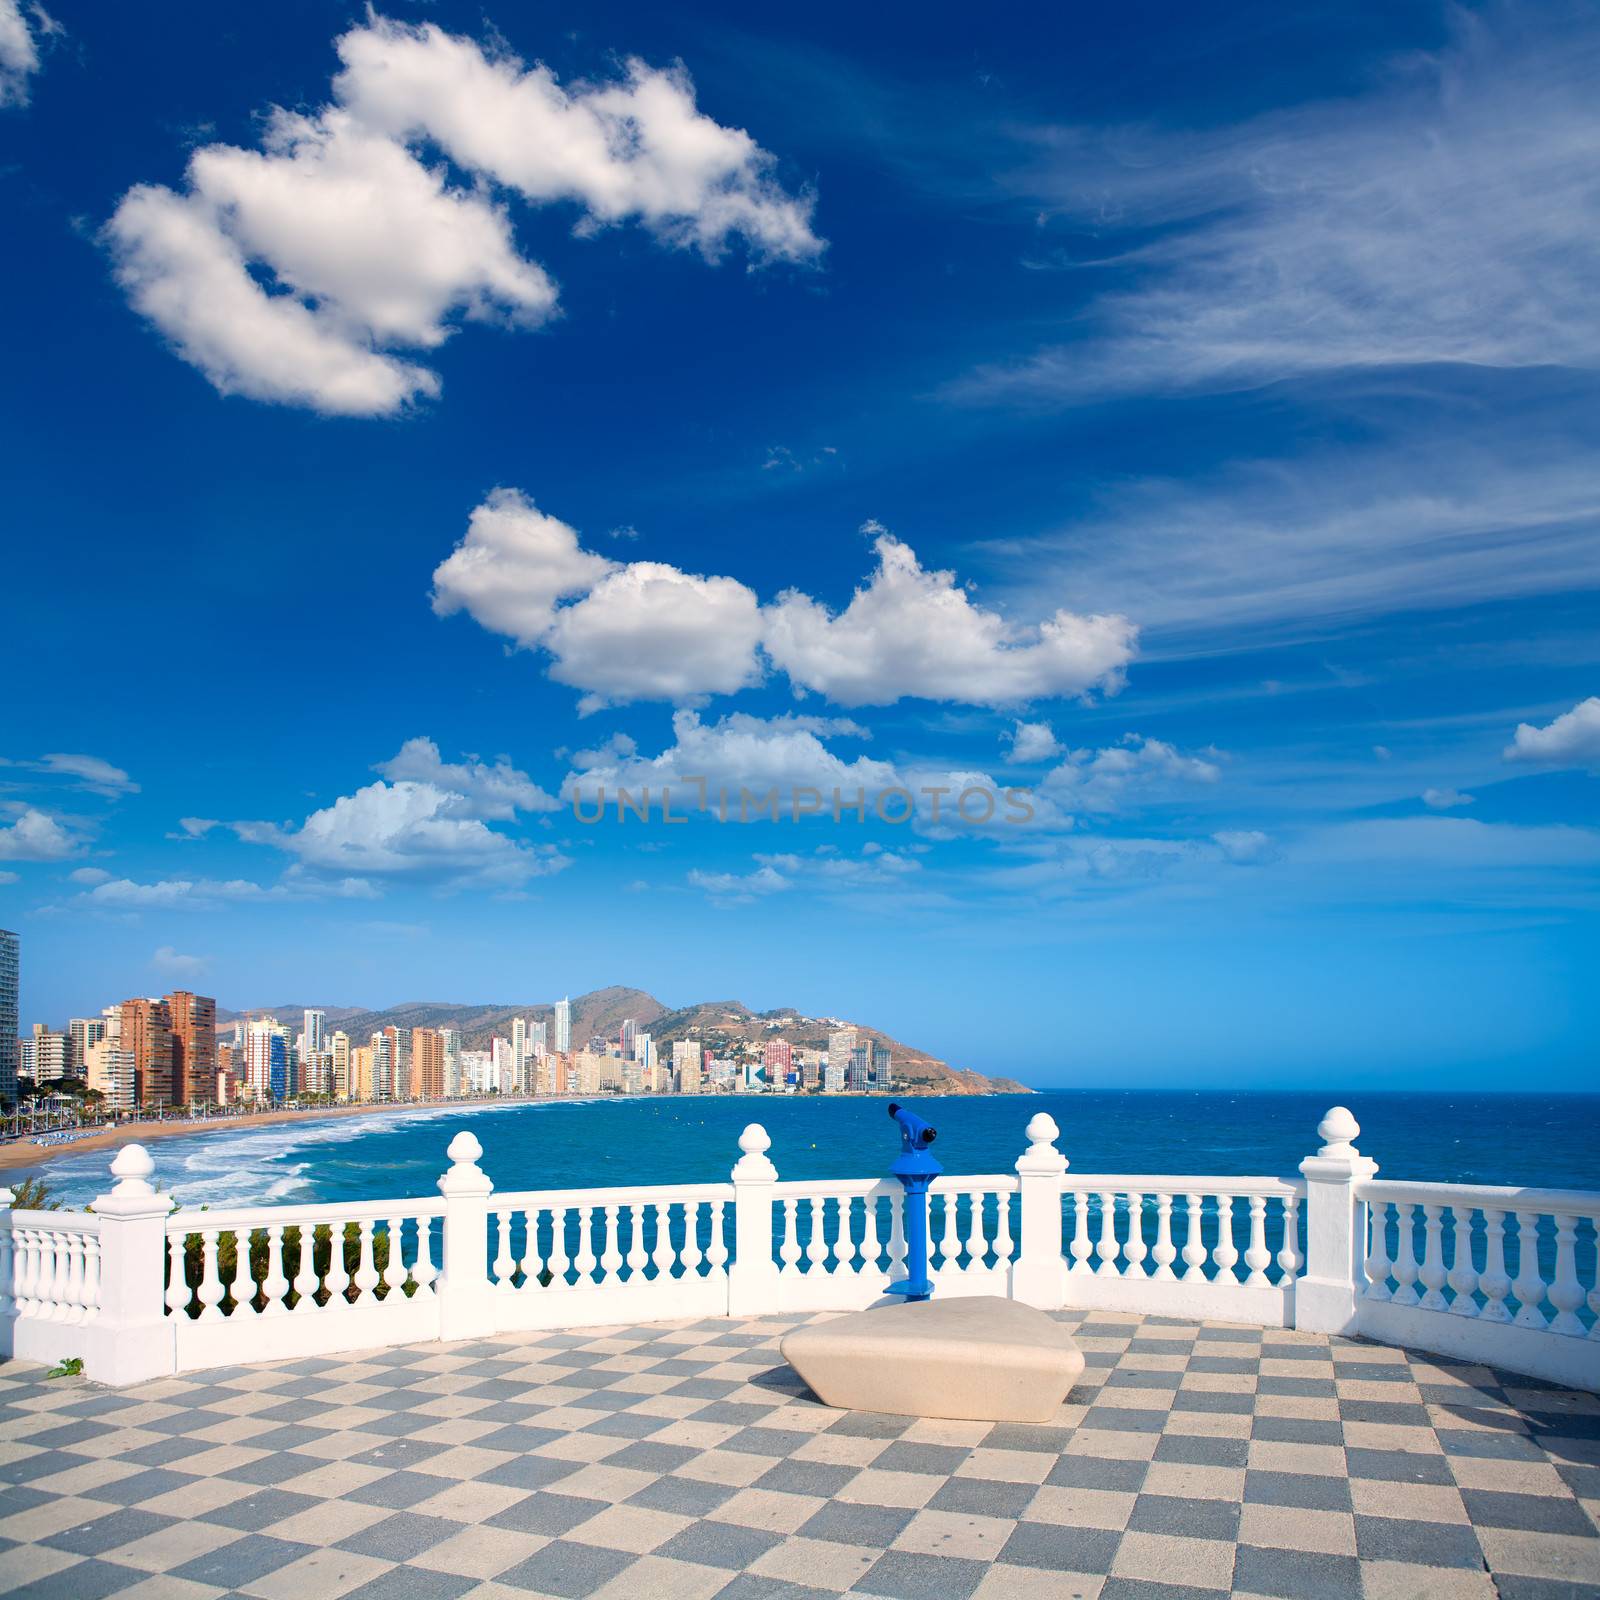 Benidorm balcon del Mediterraneo sea from white balustrade by lunamarina